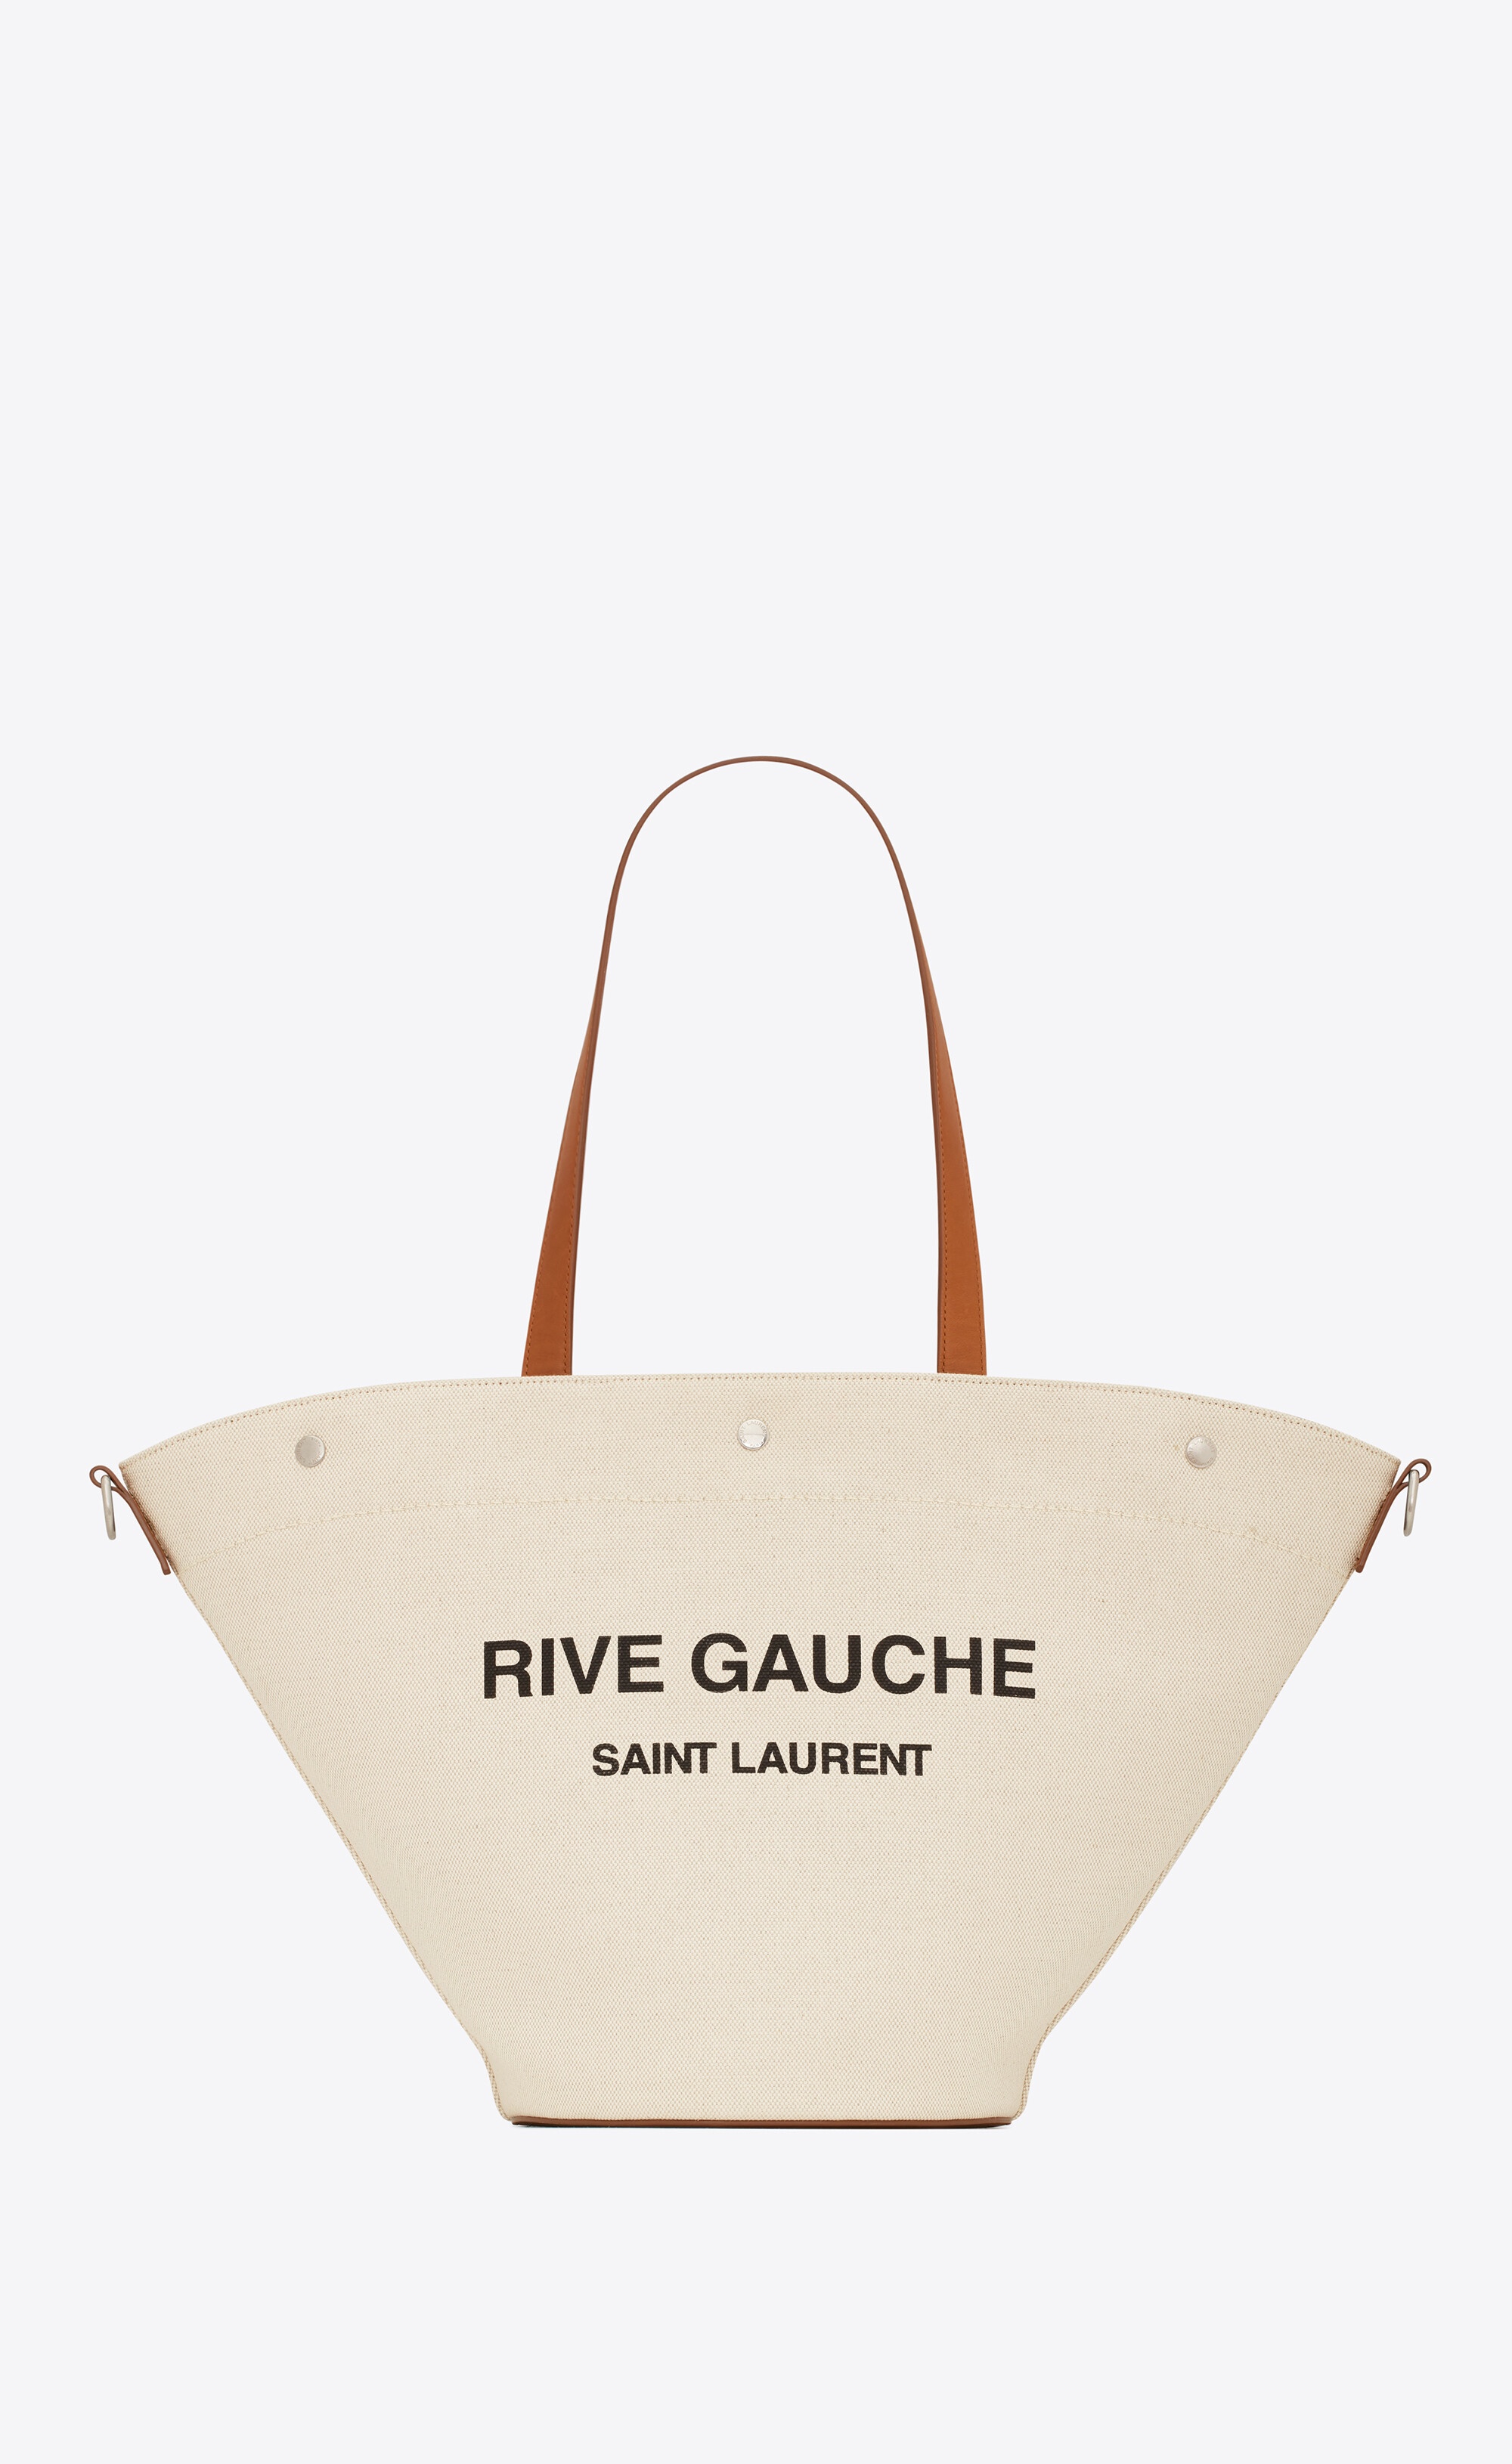 Saint Laurent Rive Gauche Fabric Tote Bag